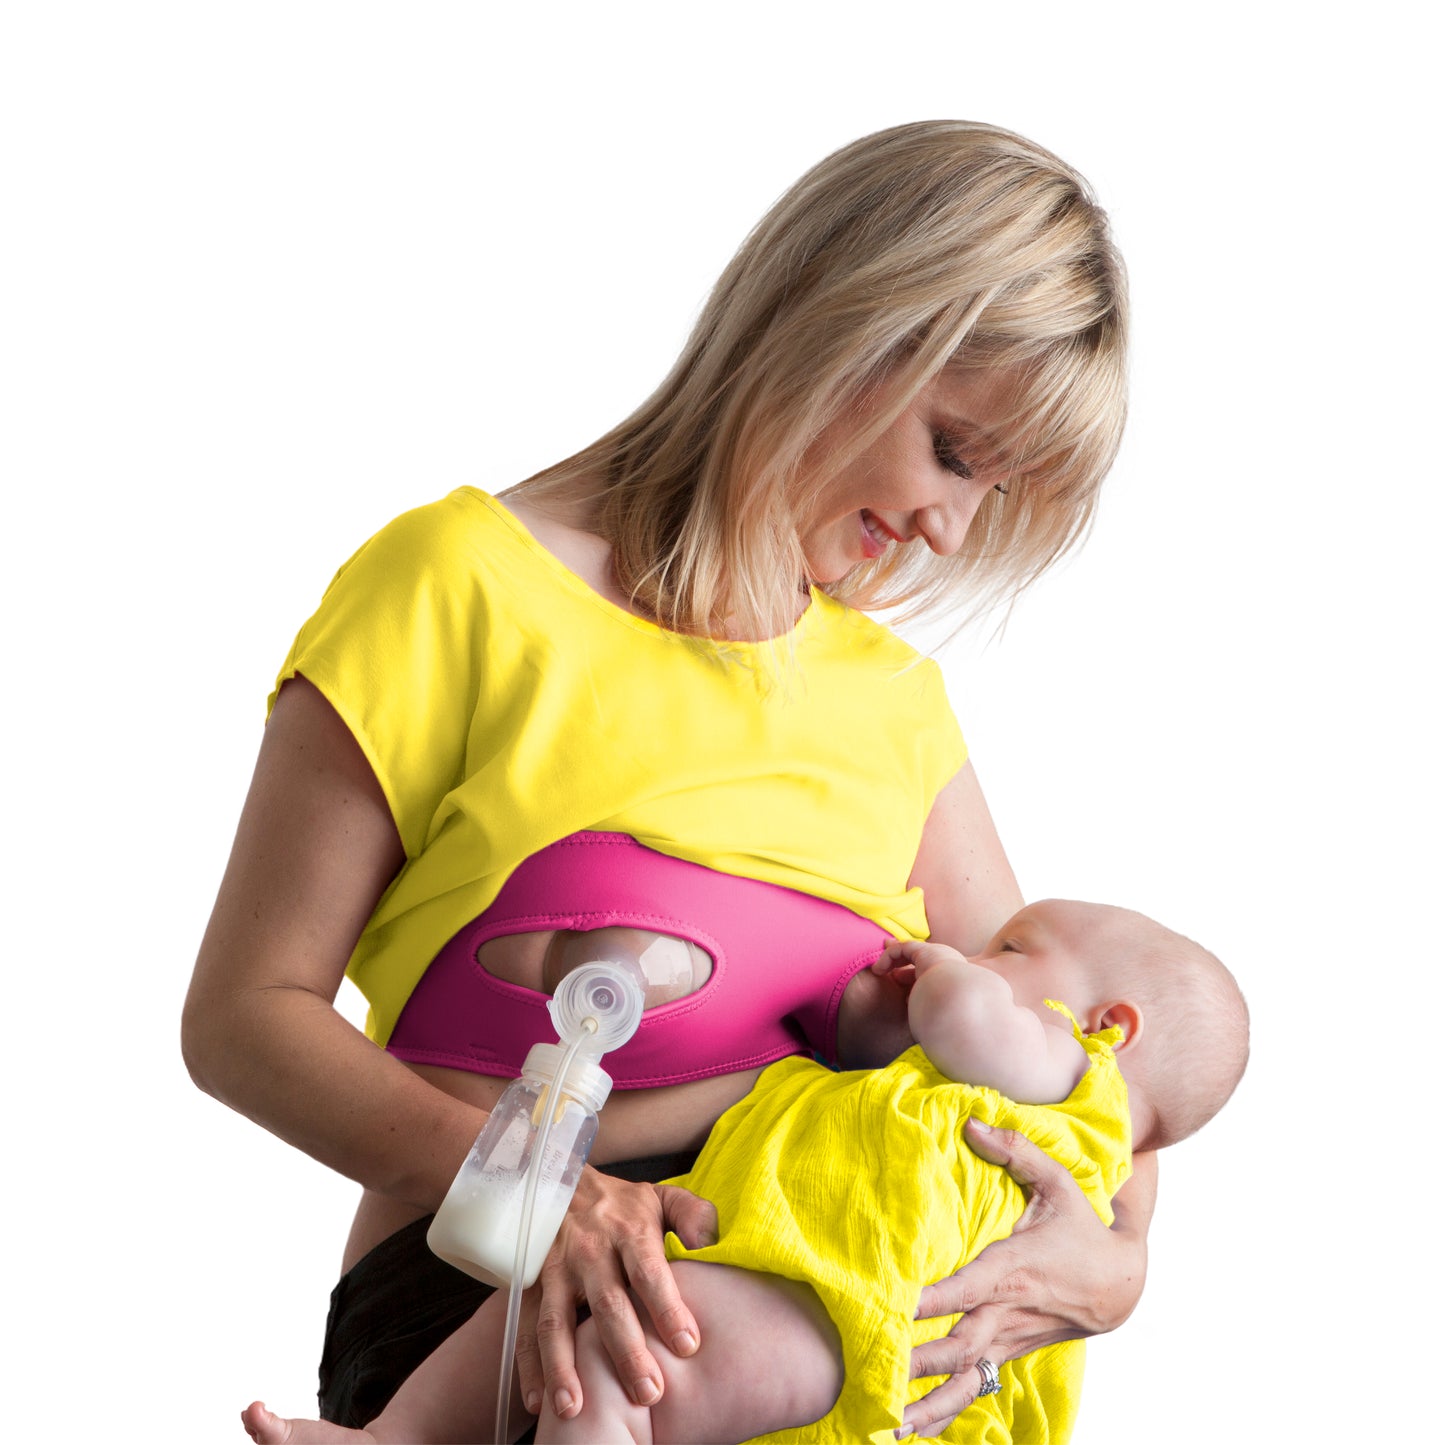 Pump Strap HandsFree Pumping & Nursing Bra – Pump More in Less Time - Fits All Moms, Pink